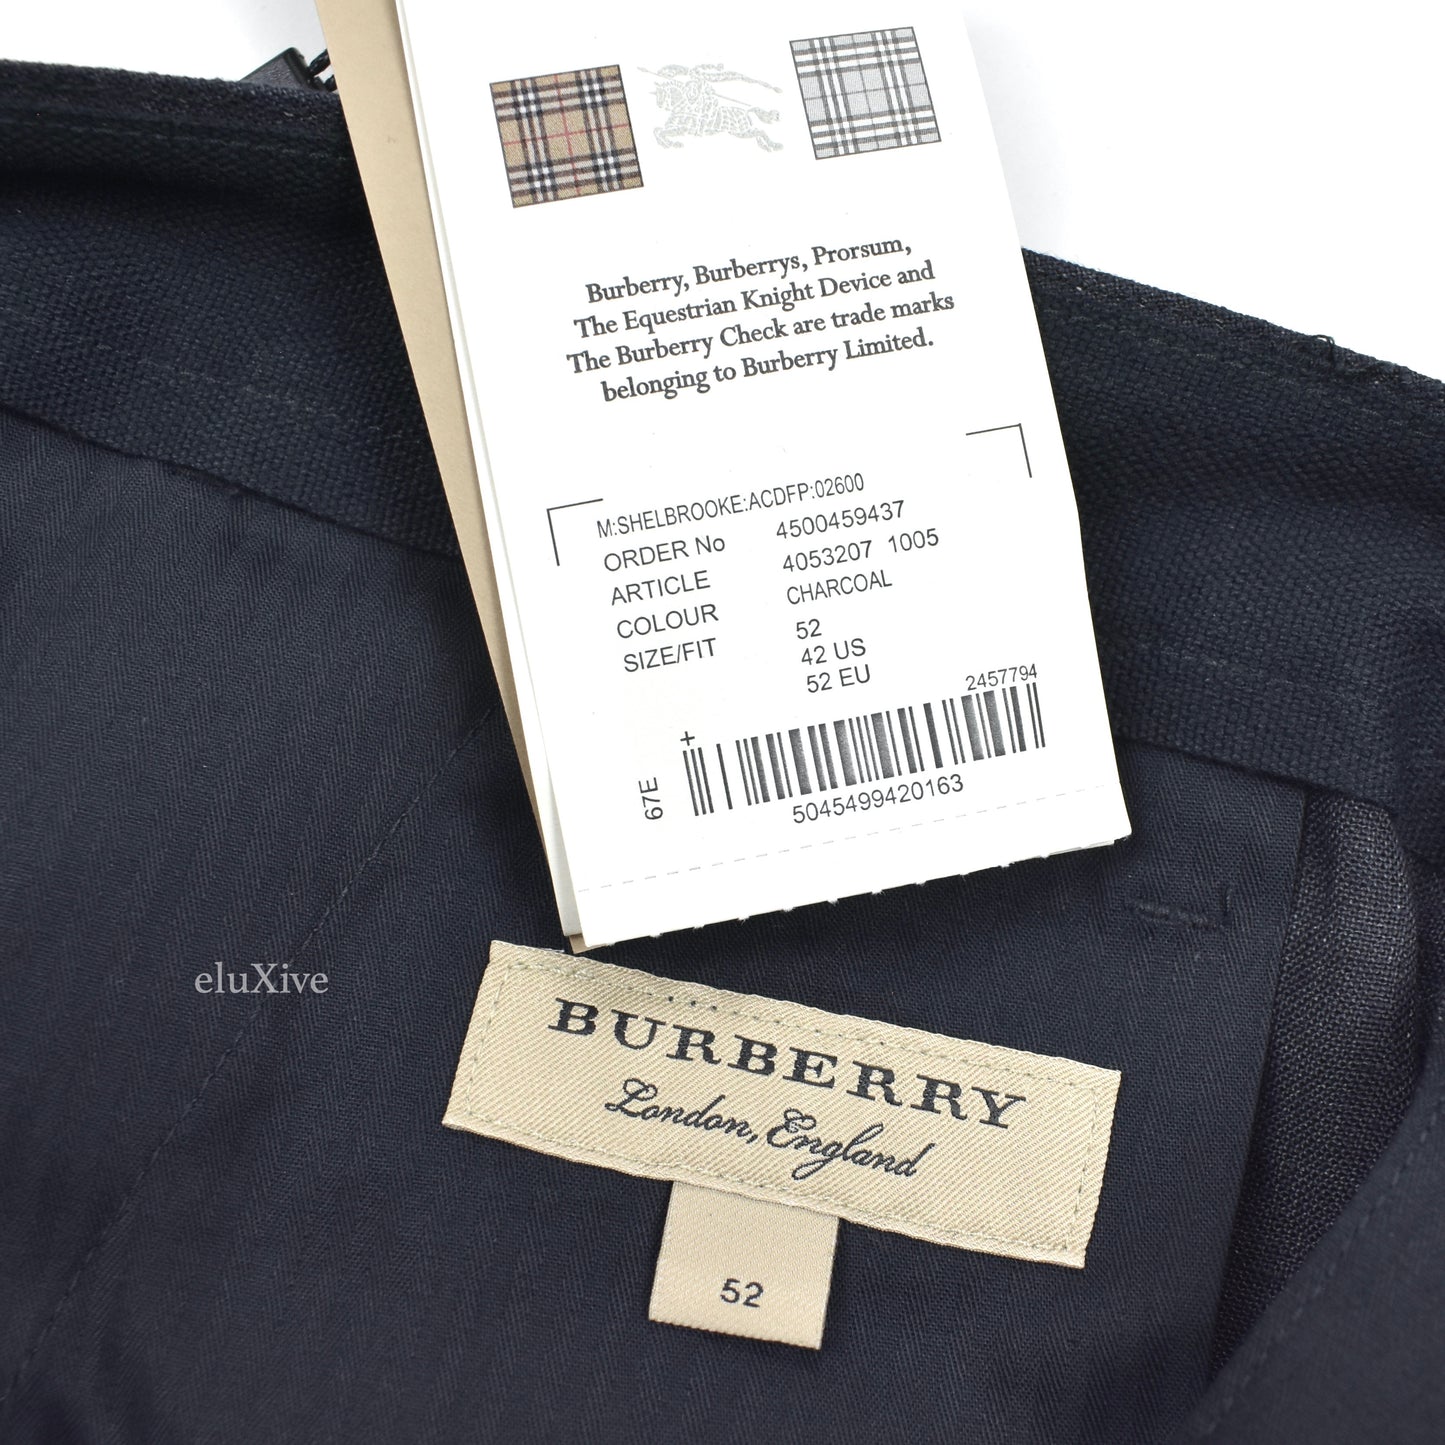 Burberry - Charcoal Gray 100% Linen Shorts